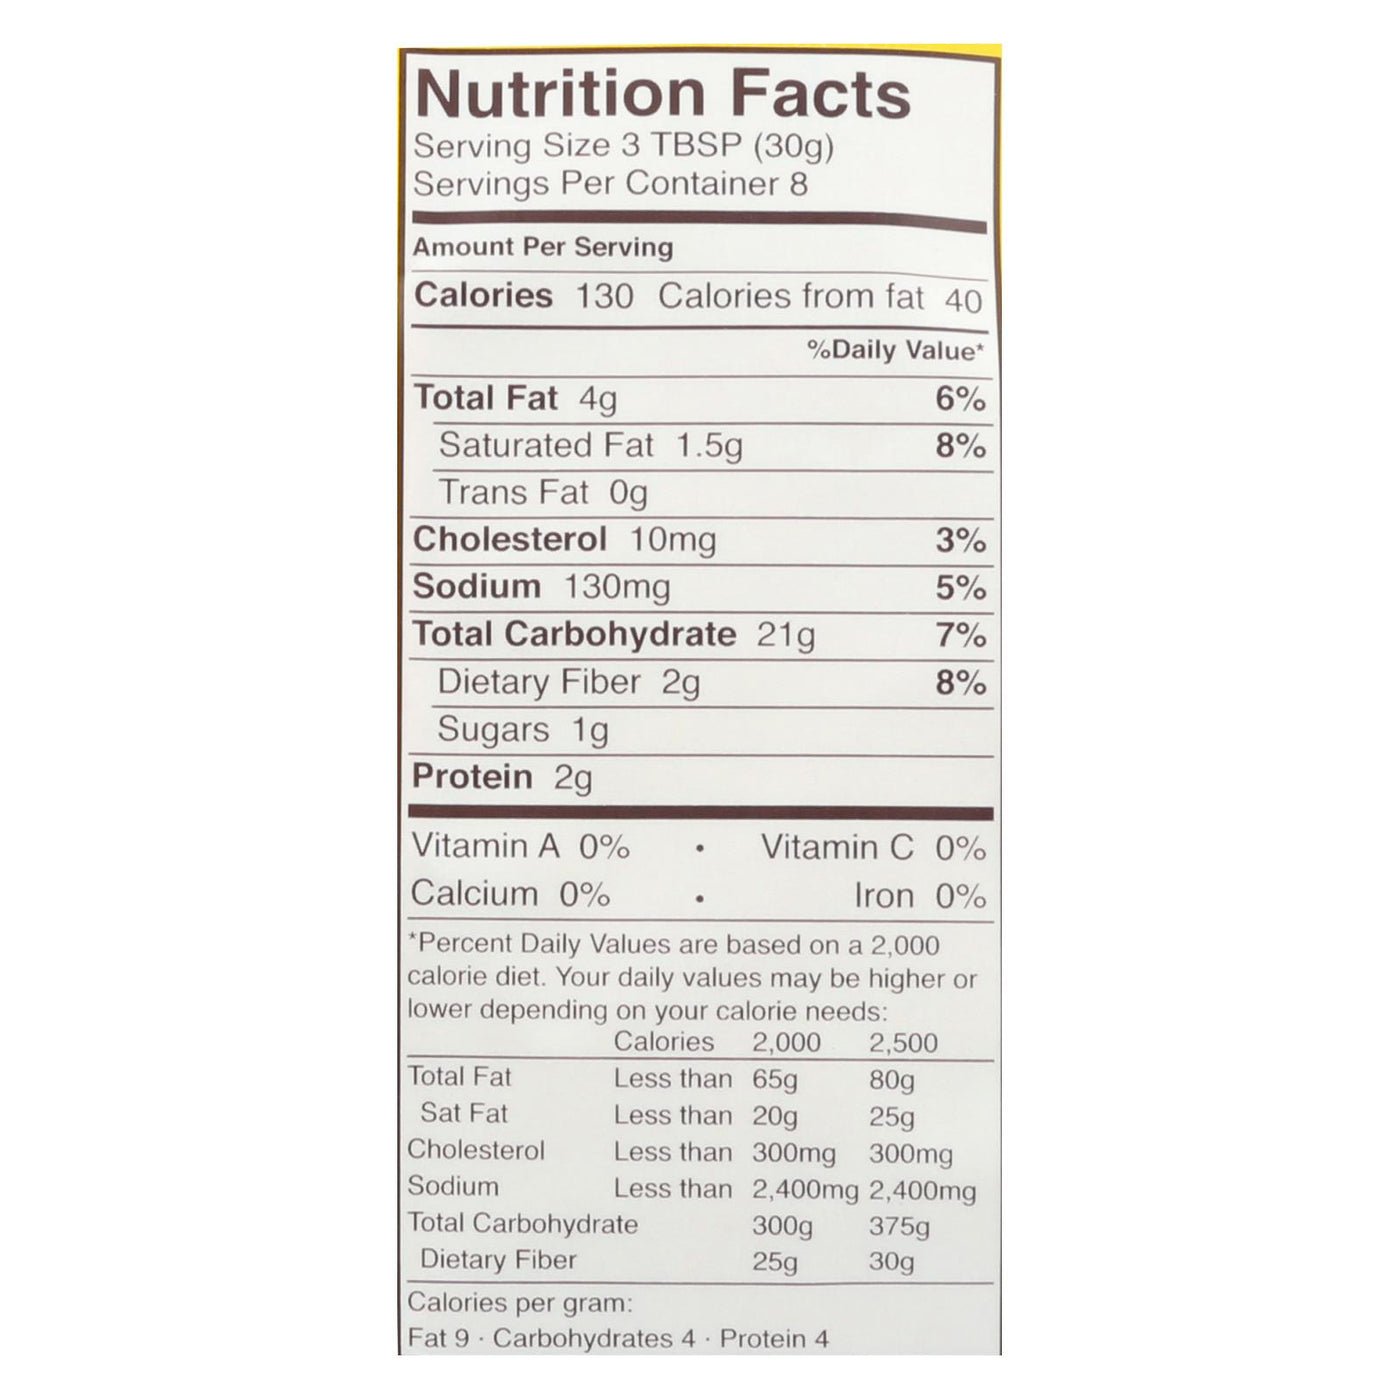 Schar Bread Crumbs Gluten Free - Case Of 12 - 8.8 Oz. | OnlyNaturals.us